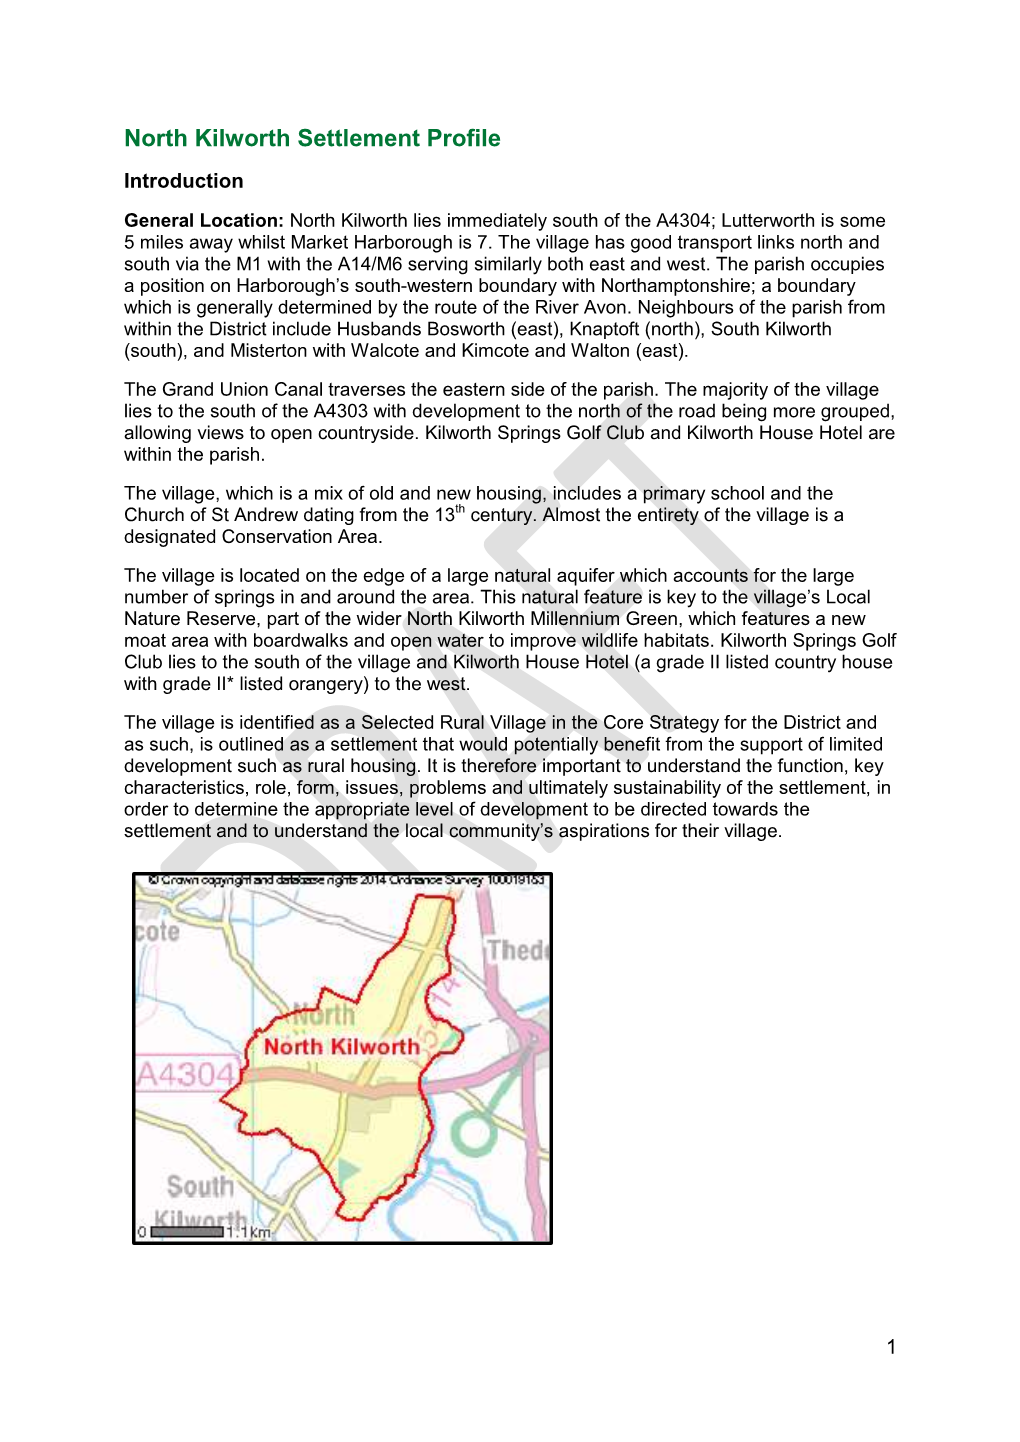 North Kilworth Settlement Profile Introduction